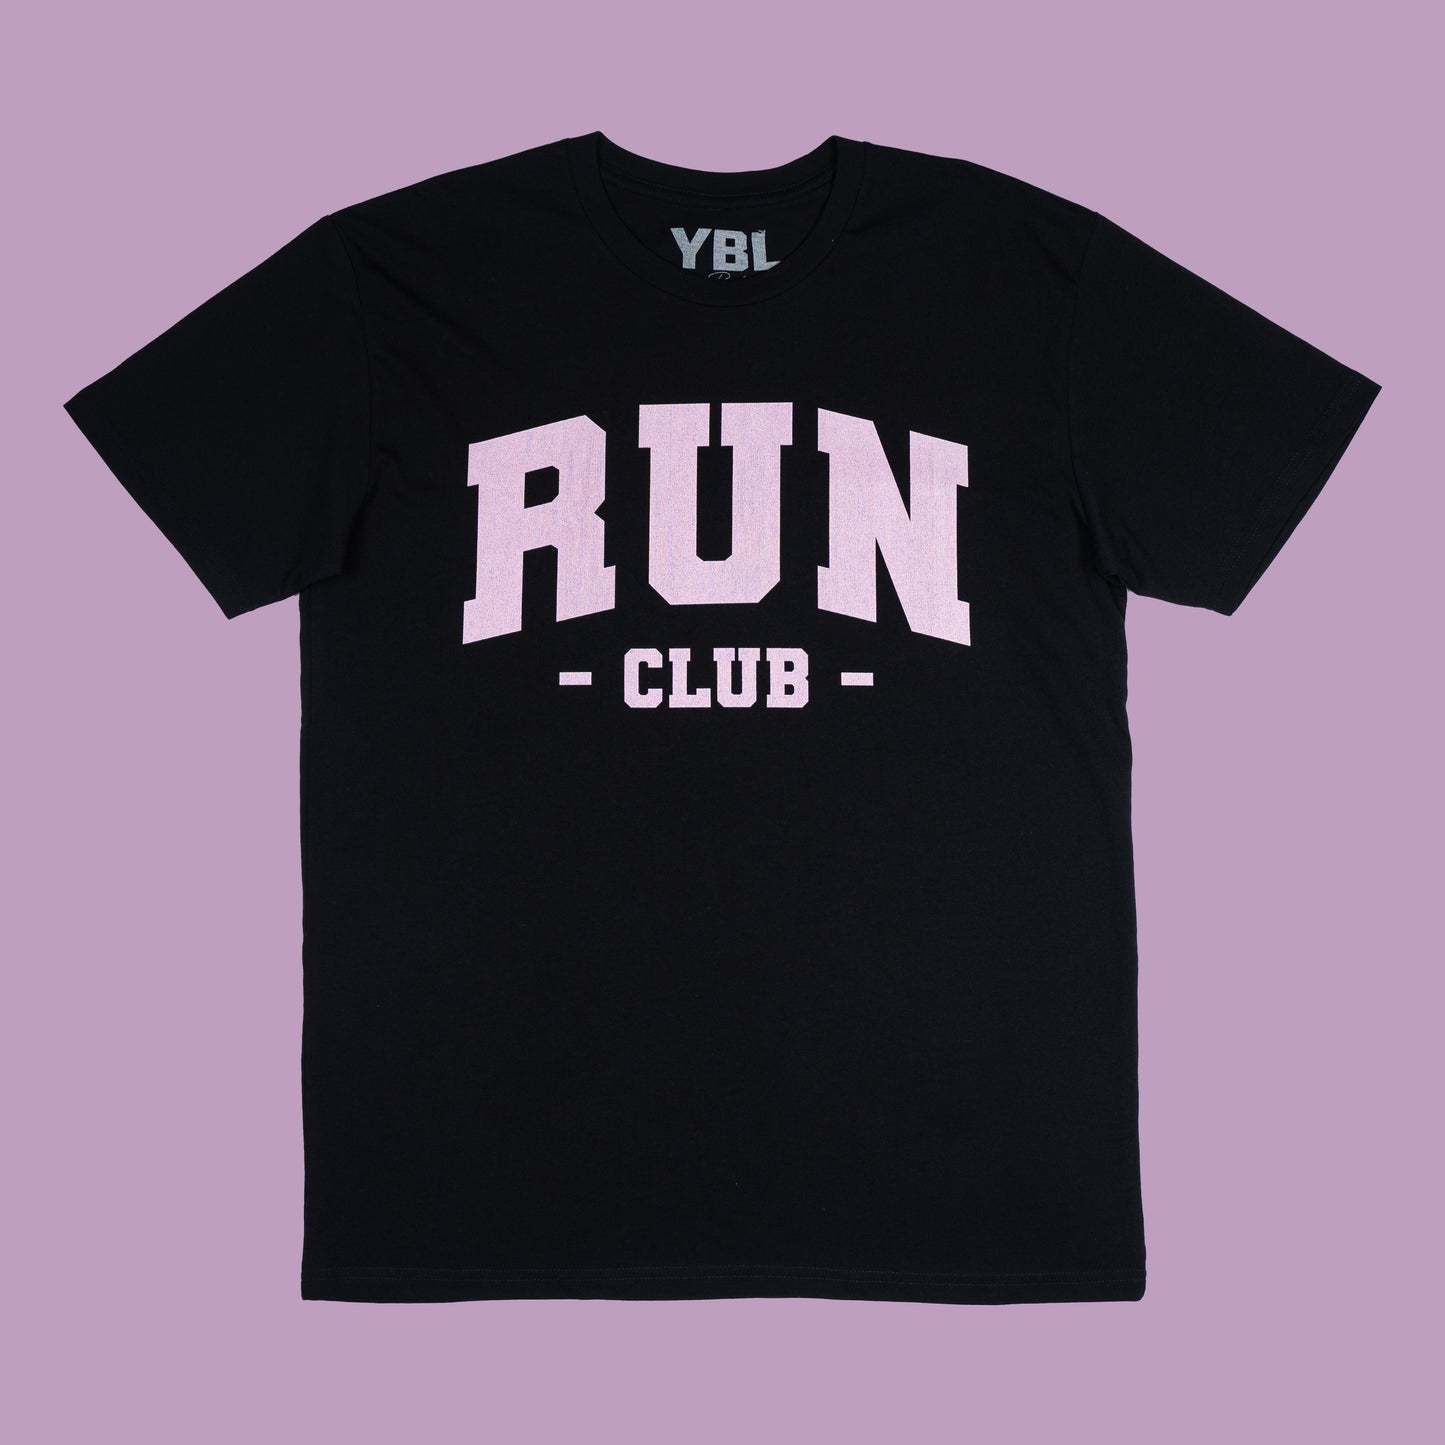 The Run Club Staple Tee in Black